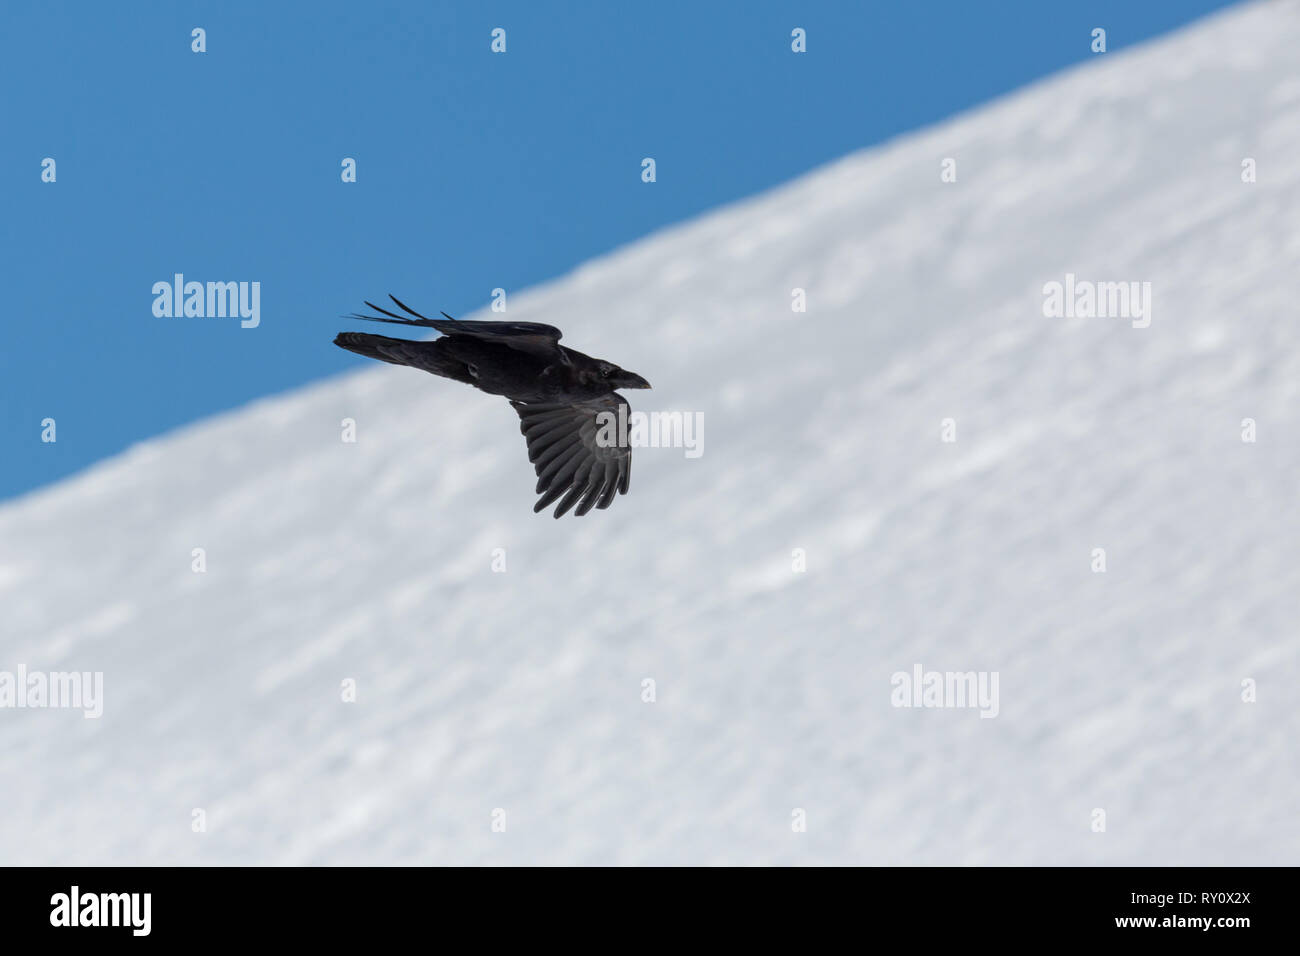 Northern naturale corvo imperiale (Corvus corax) in volo, cielo blu, neve Foto Stock